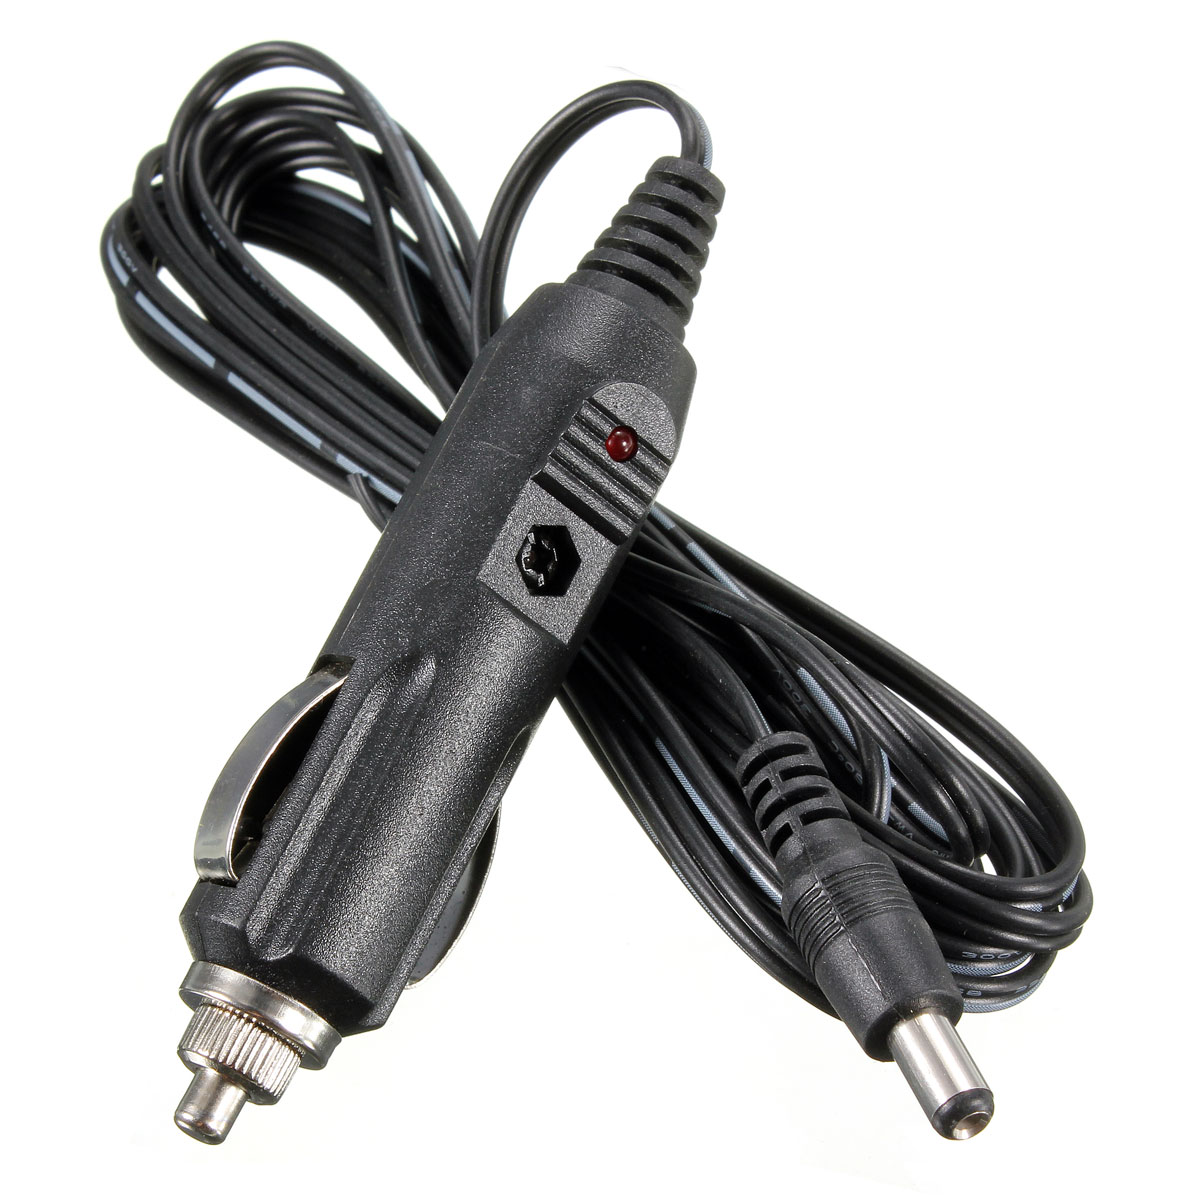 12V 24V Car Cigarette Lighter Power Supply Cord Adapter Cable DC Plug 2